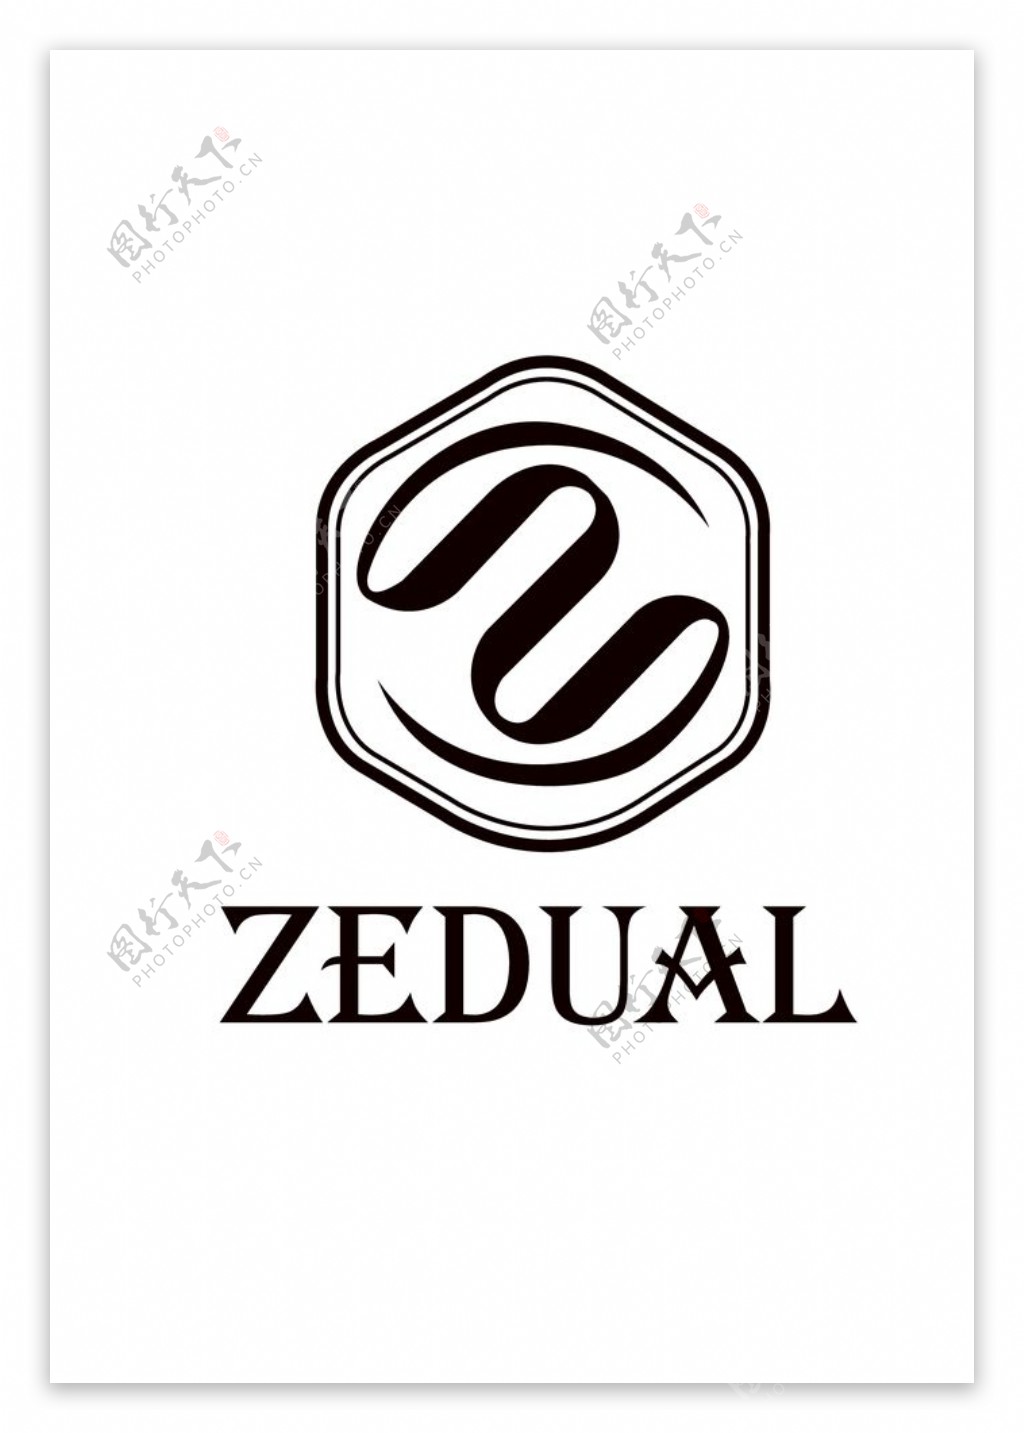 zedual丝带logo图片